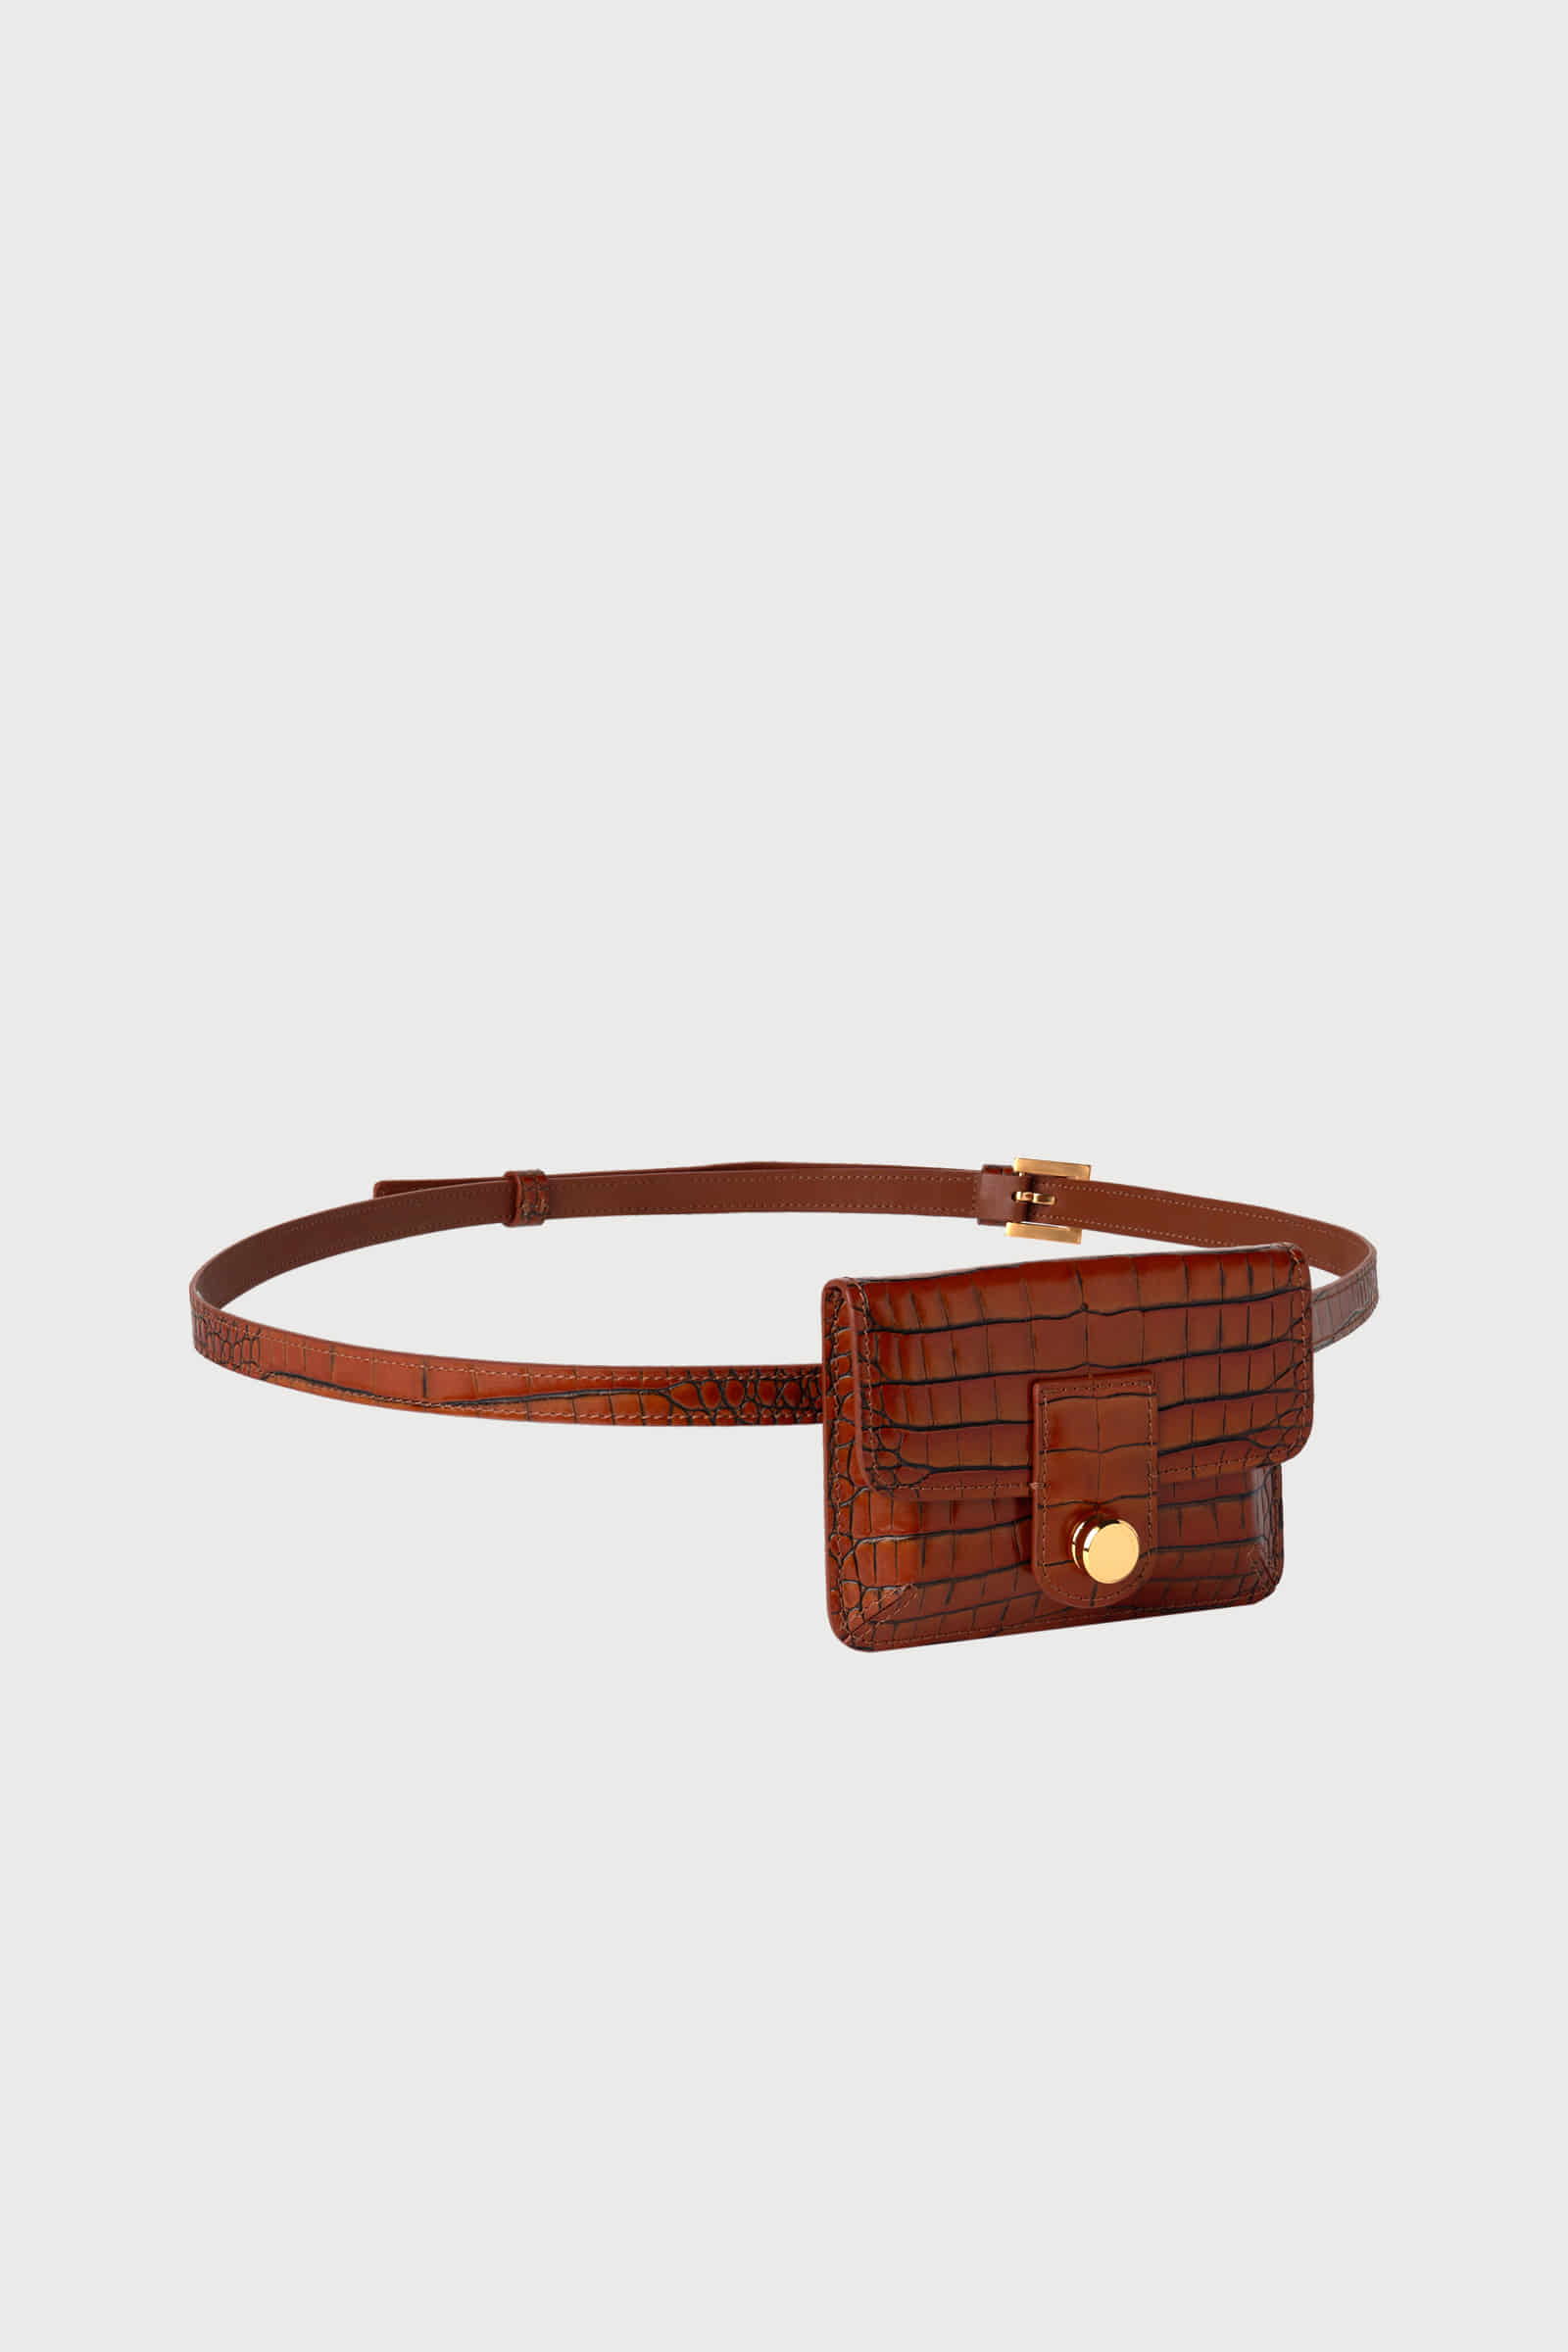 Part.4 Mini belt bag (croc brown)